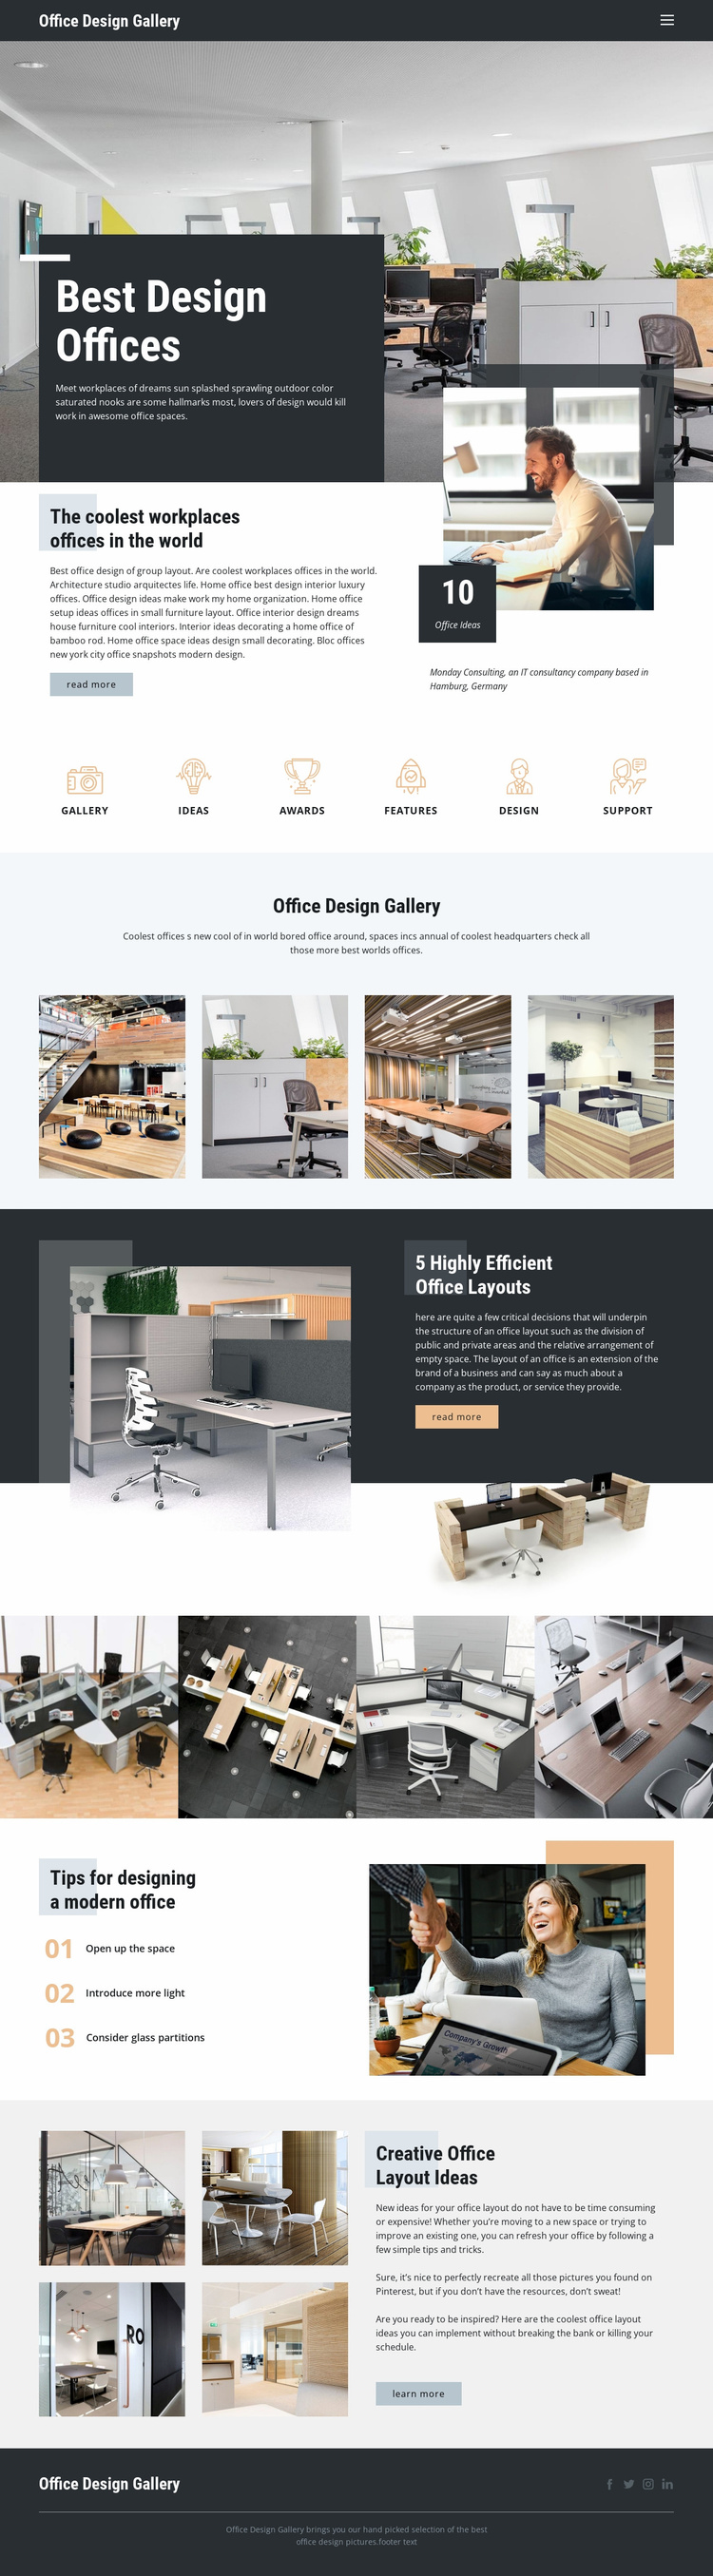 Best Design Offices Website Template